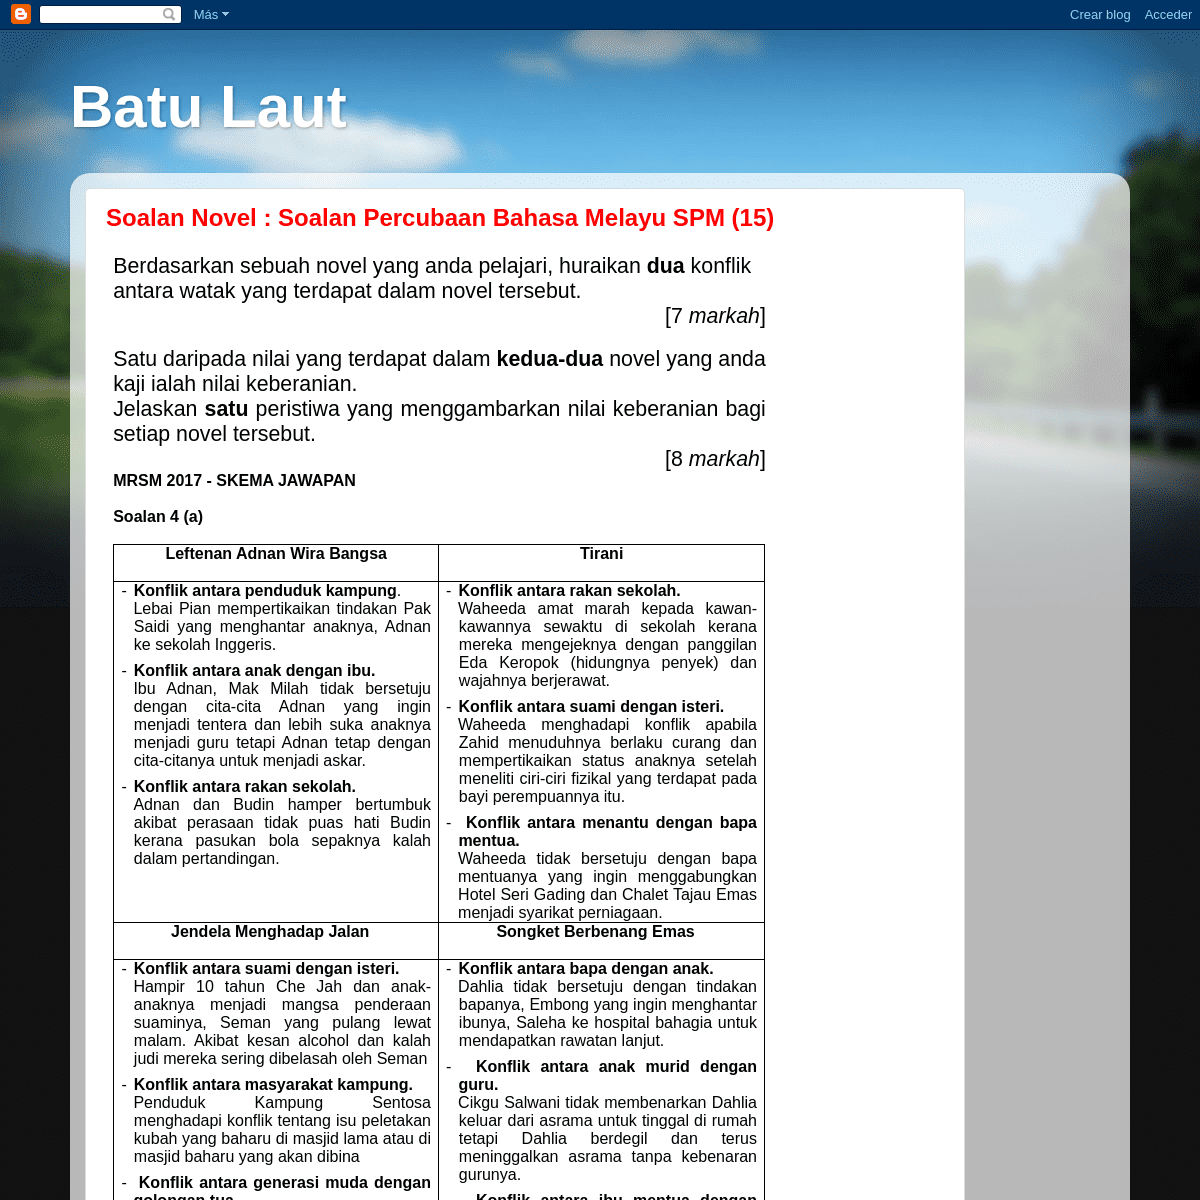 A complete backup of batulaut2.blogspot.com